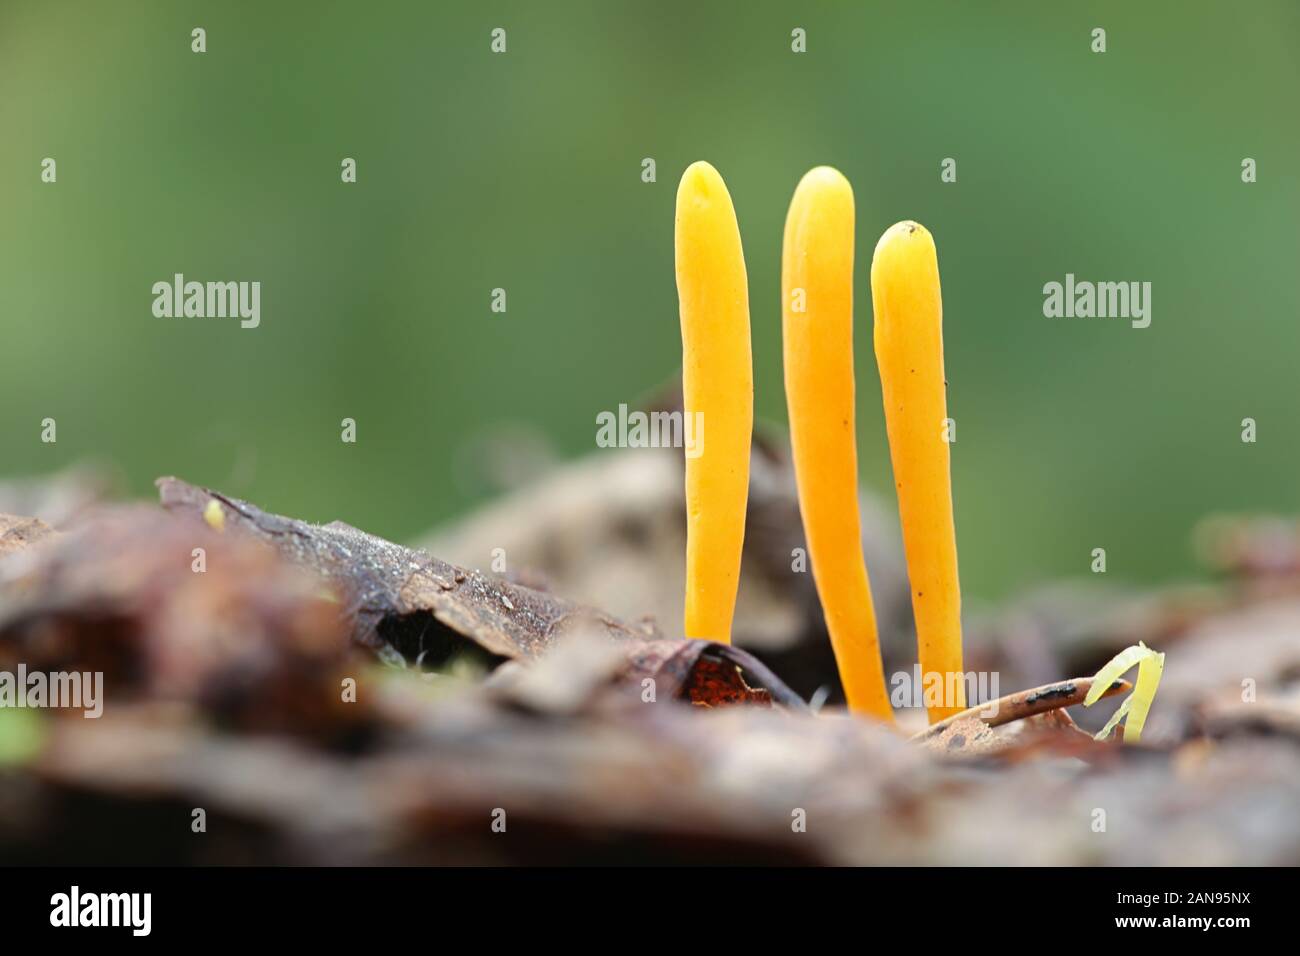 Clavulinopsis helvola, golden club fungus, wild mushrooms from Finland Stock Photo